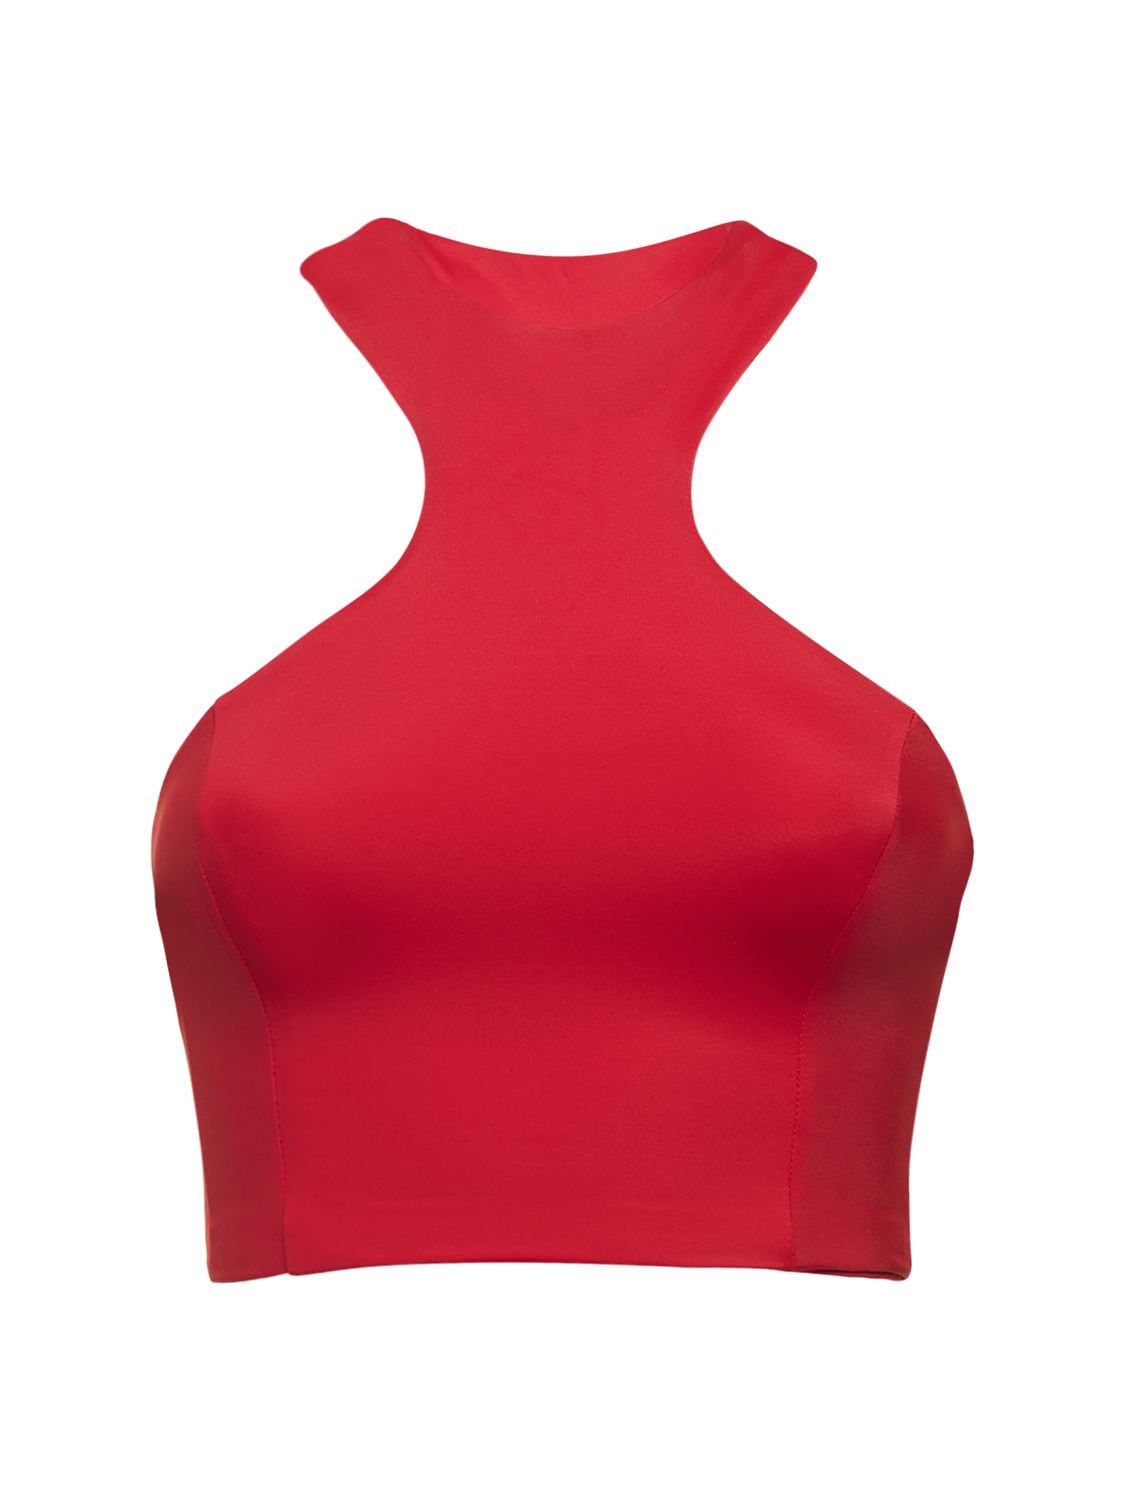 Dos Gardenias Fift Y-four Bikini Top In Red